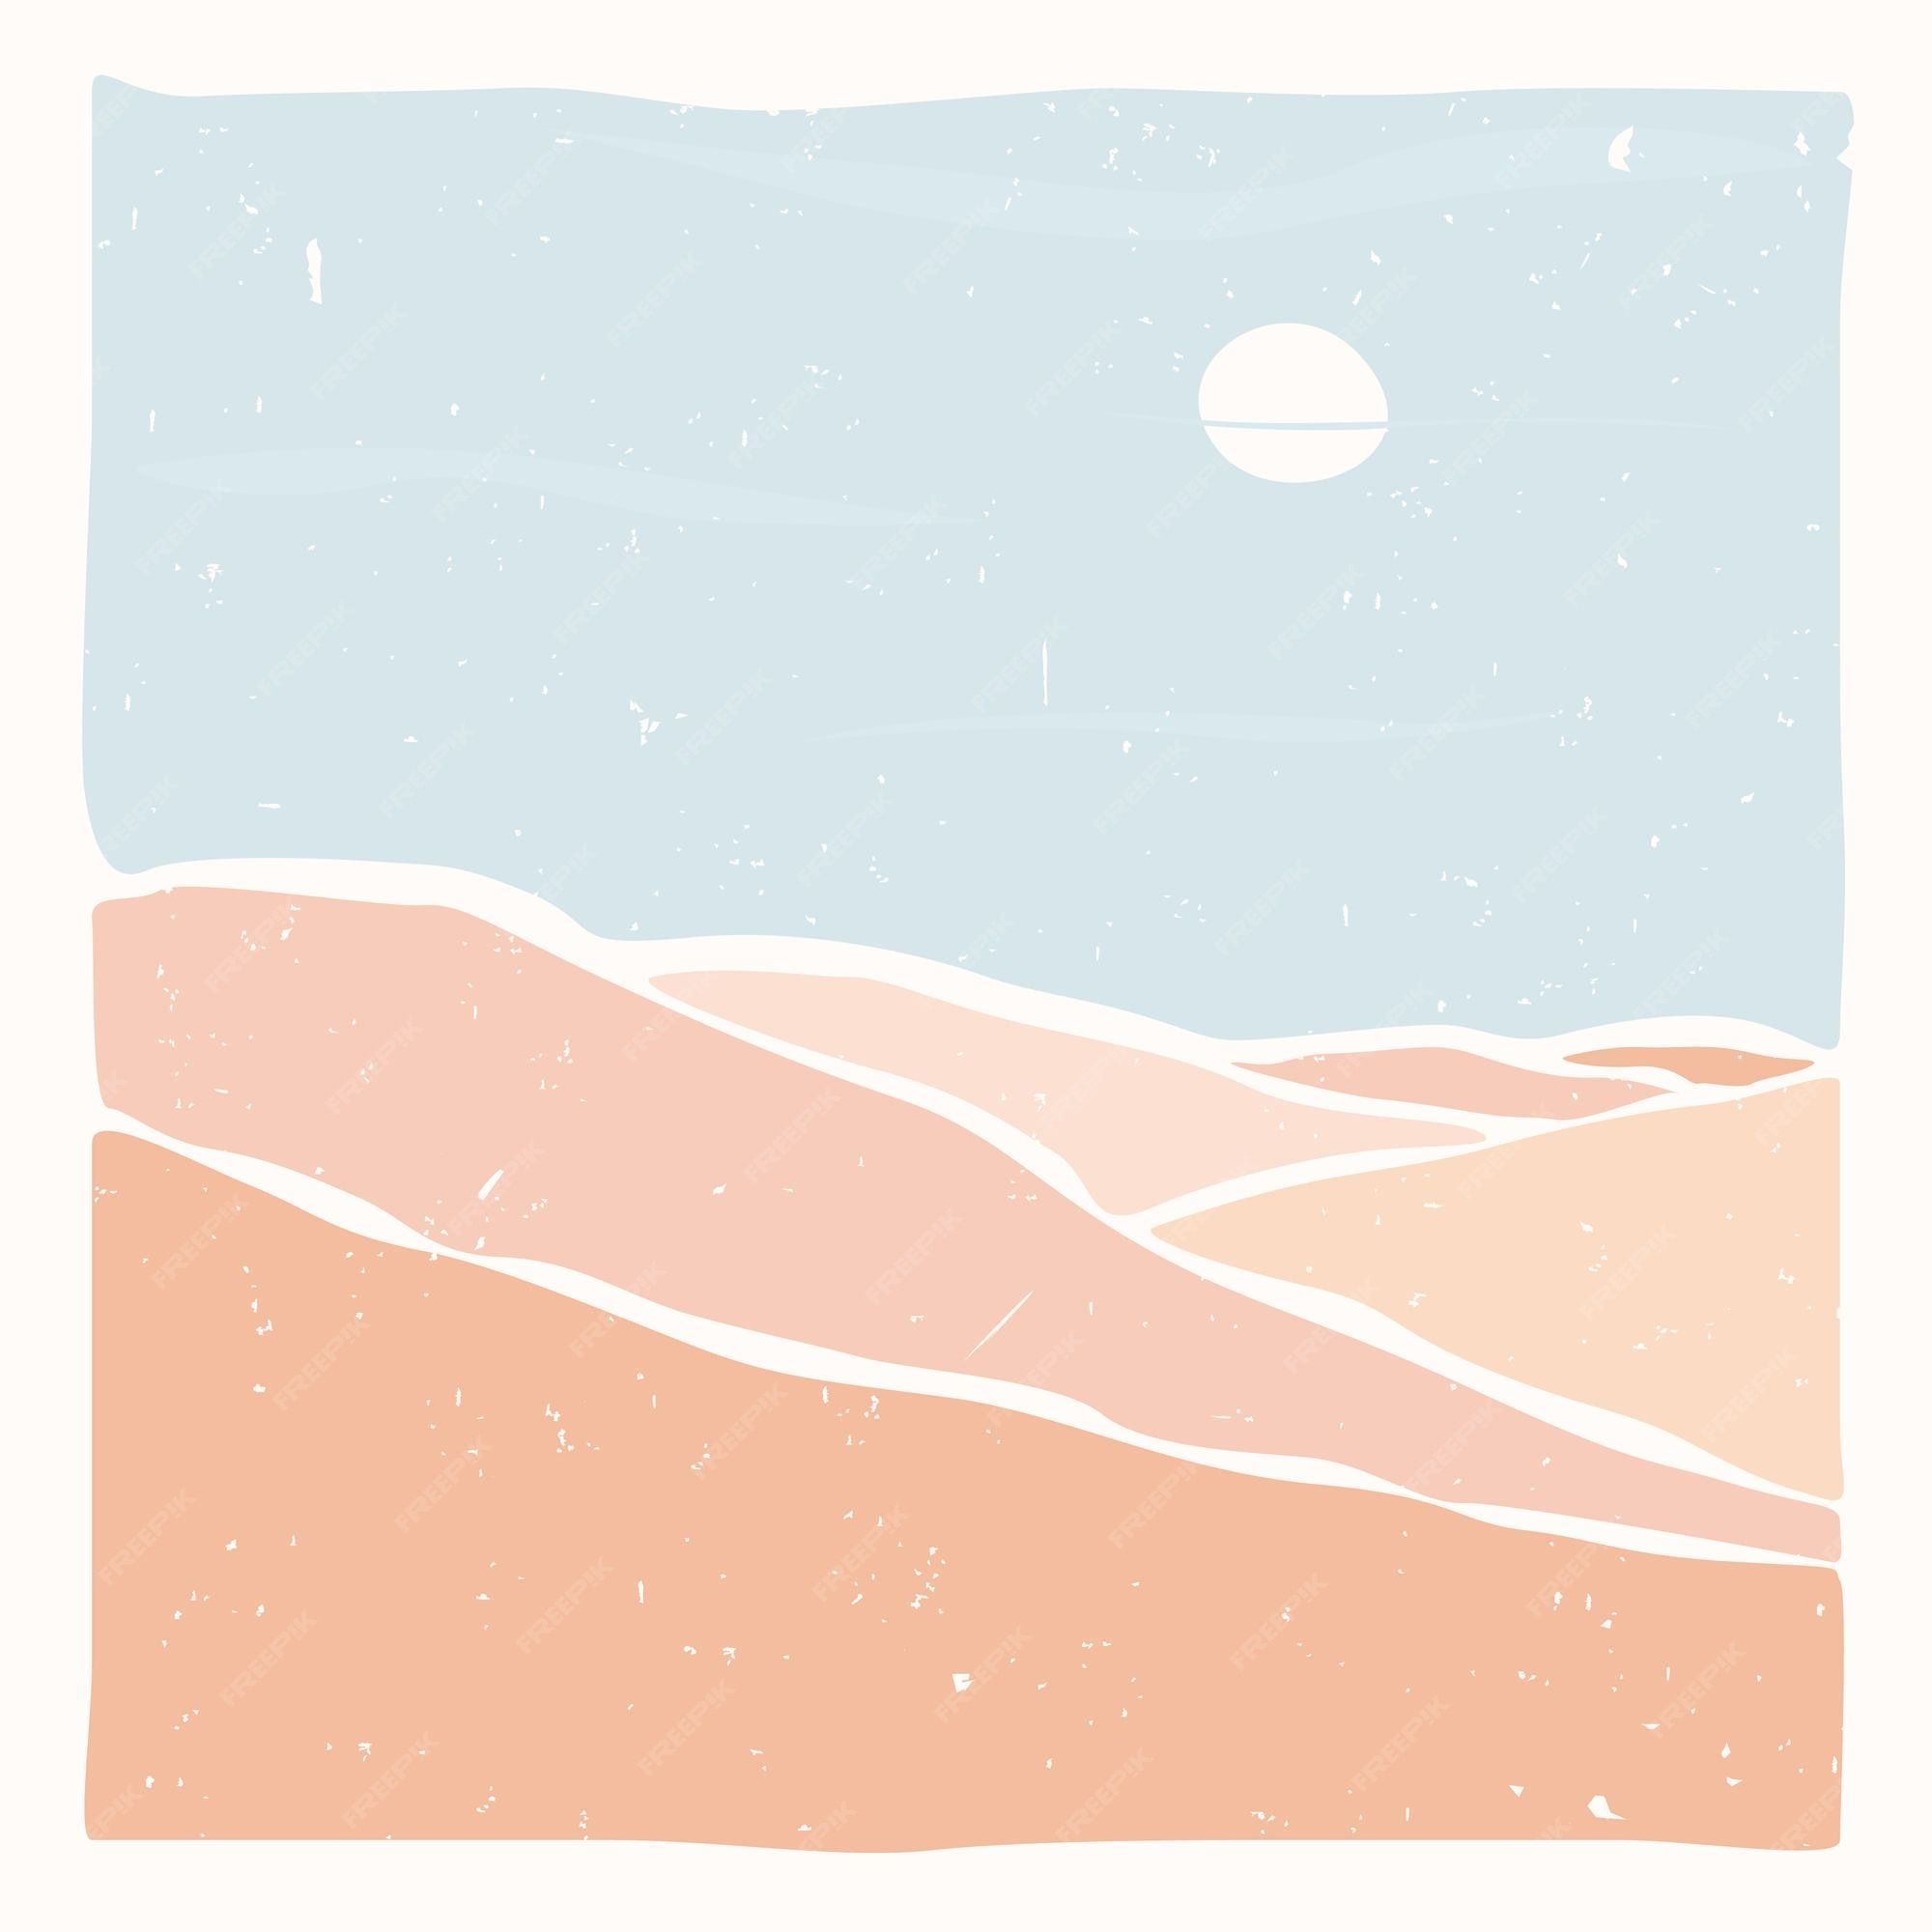 Premium Vector. Boho minimalist landscape minimal scene in desert modern art pastel colors abstract silhouette hills aesthetic mountains stock vector illustration